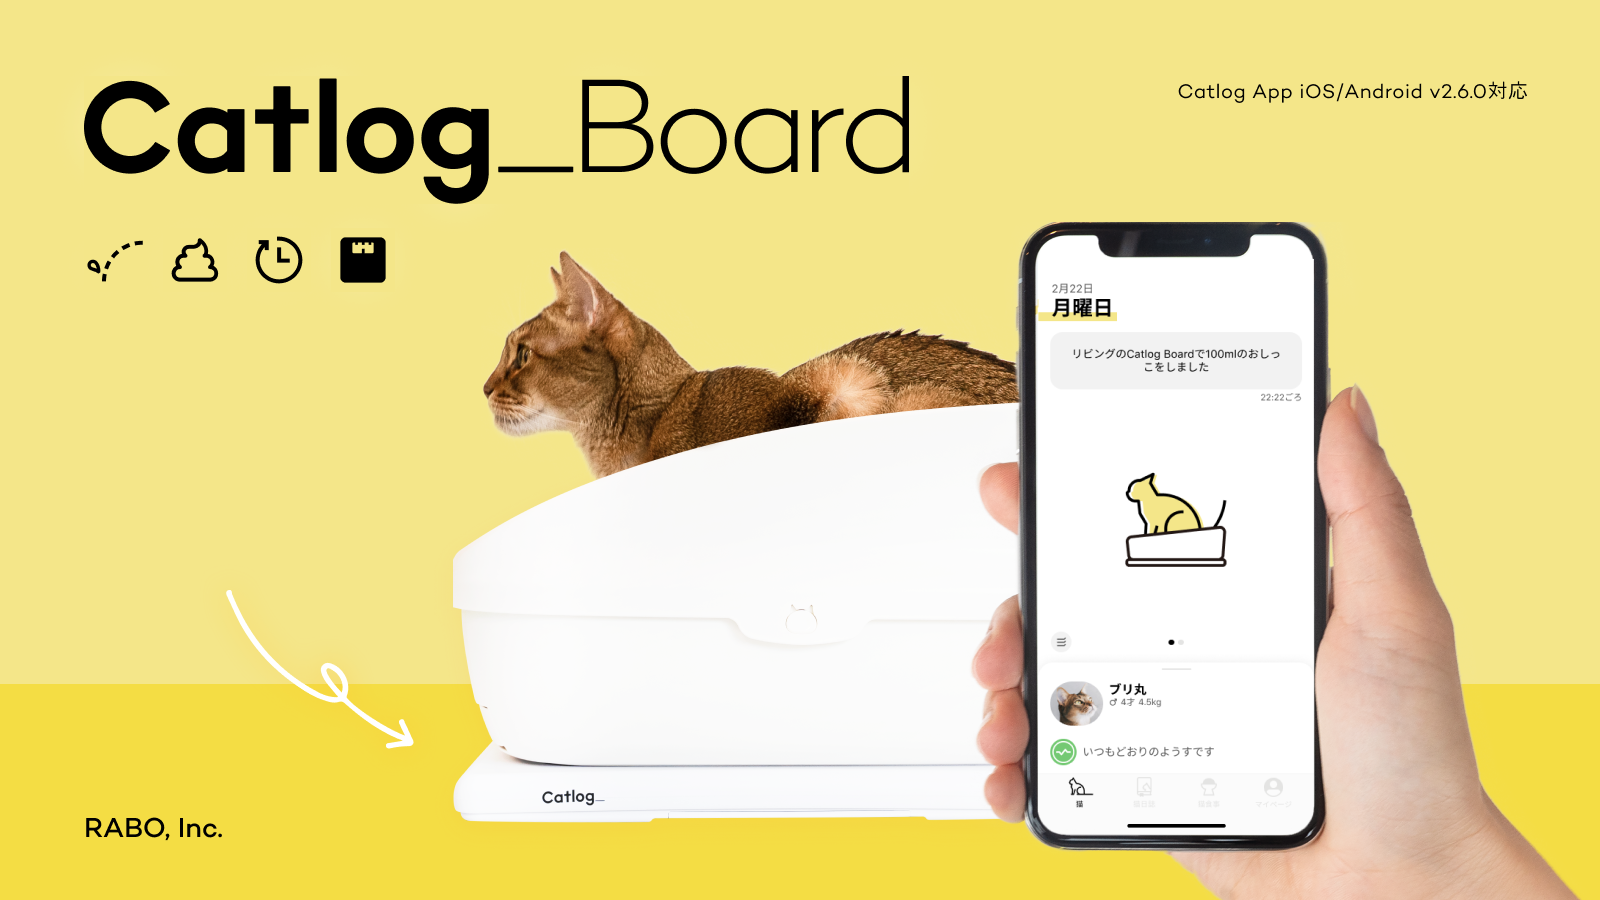 Catlog Board Catlog App iOS/Android v2.6.0対応 RABO, Inc. 